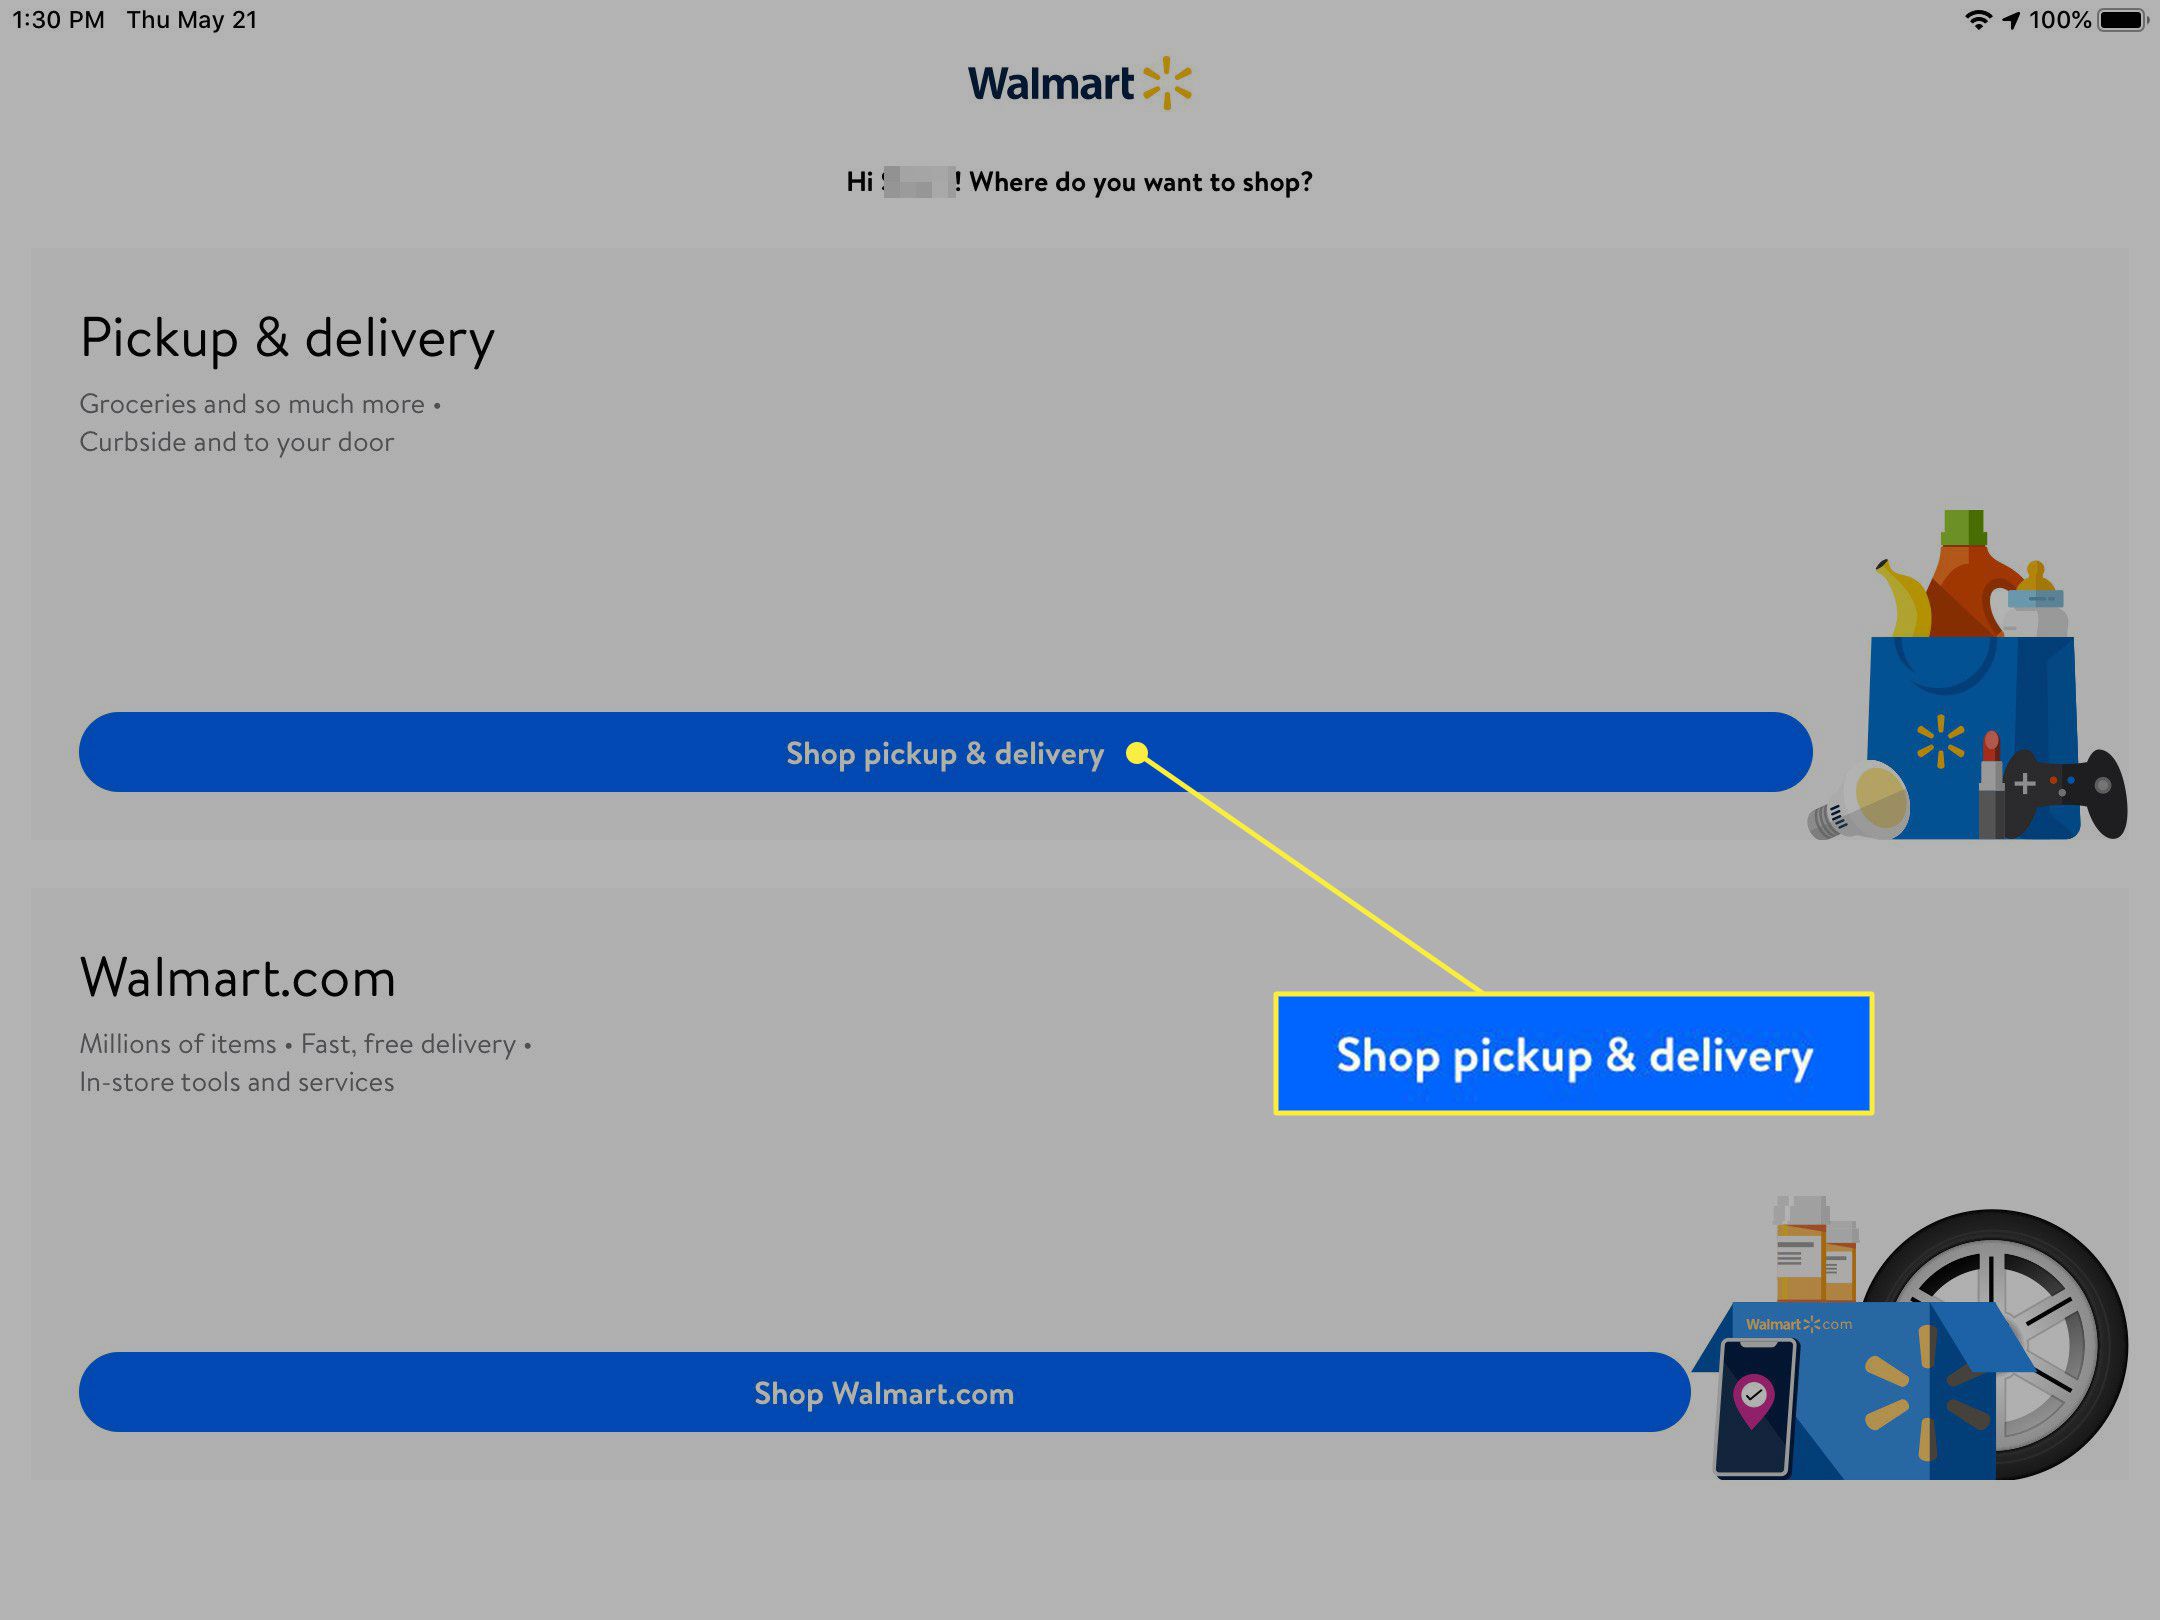 De knop Shop Pickup & Delivery in de Walmart-app